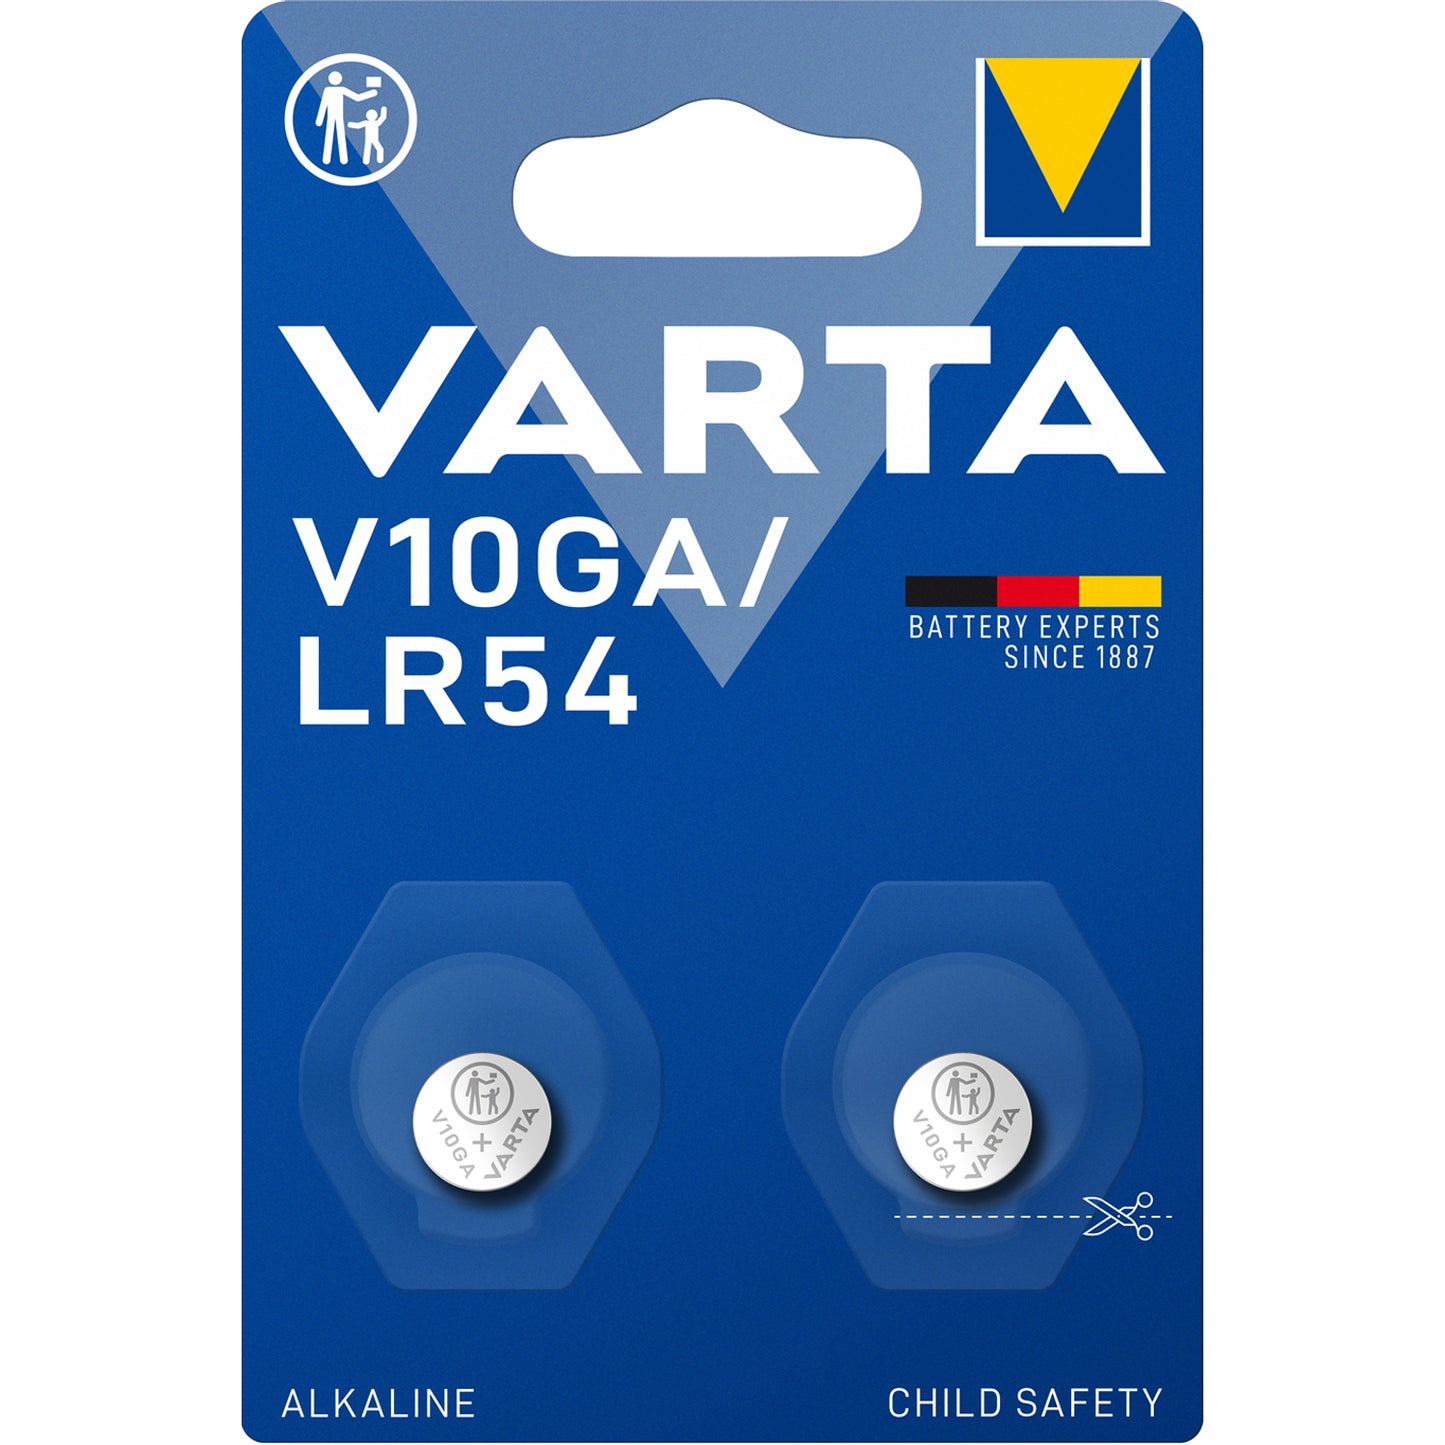 V10GA / LR54 1,5V Alkaline Batteri 2-pack